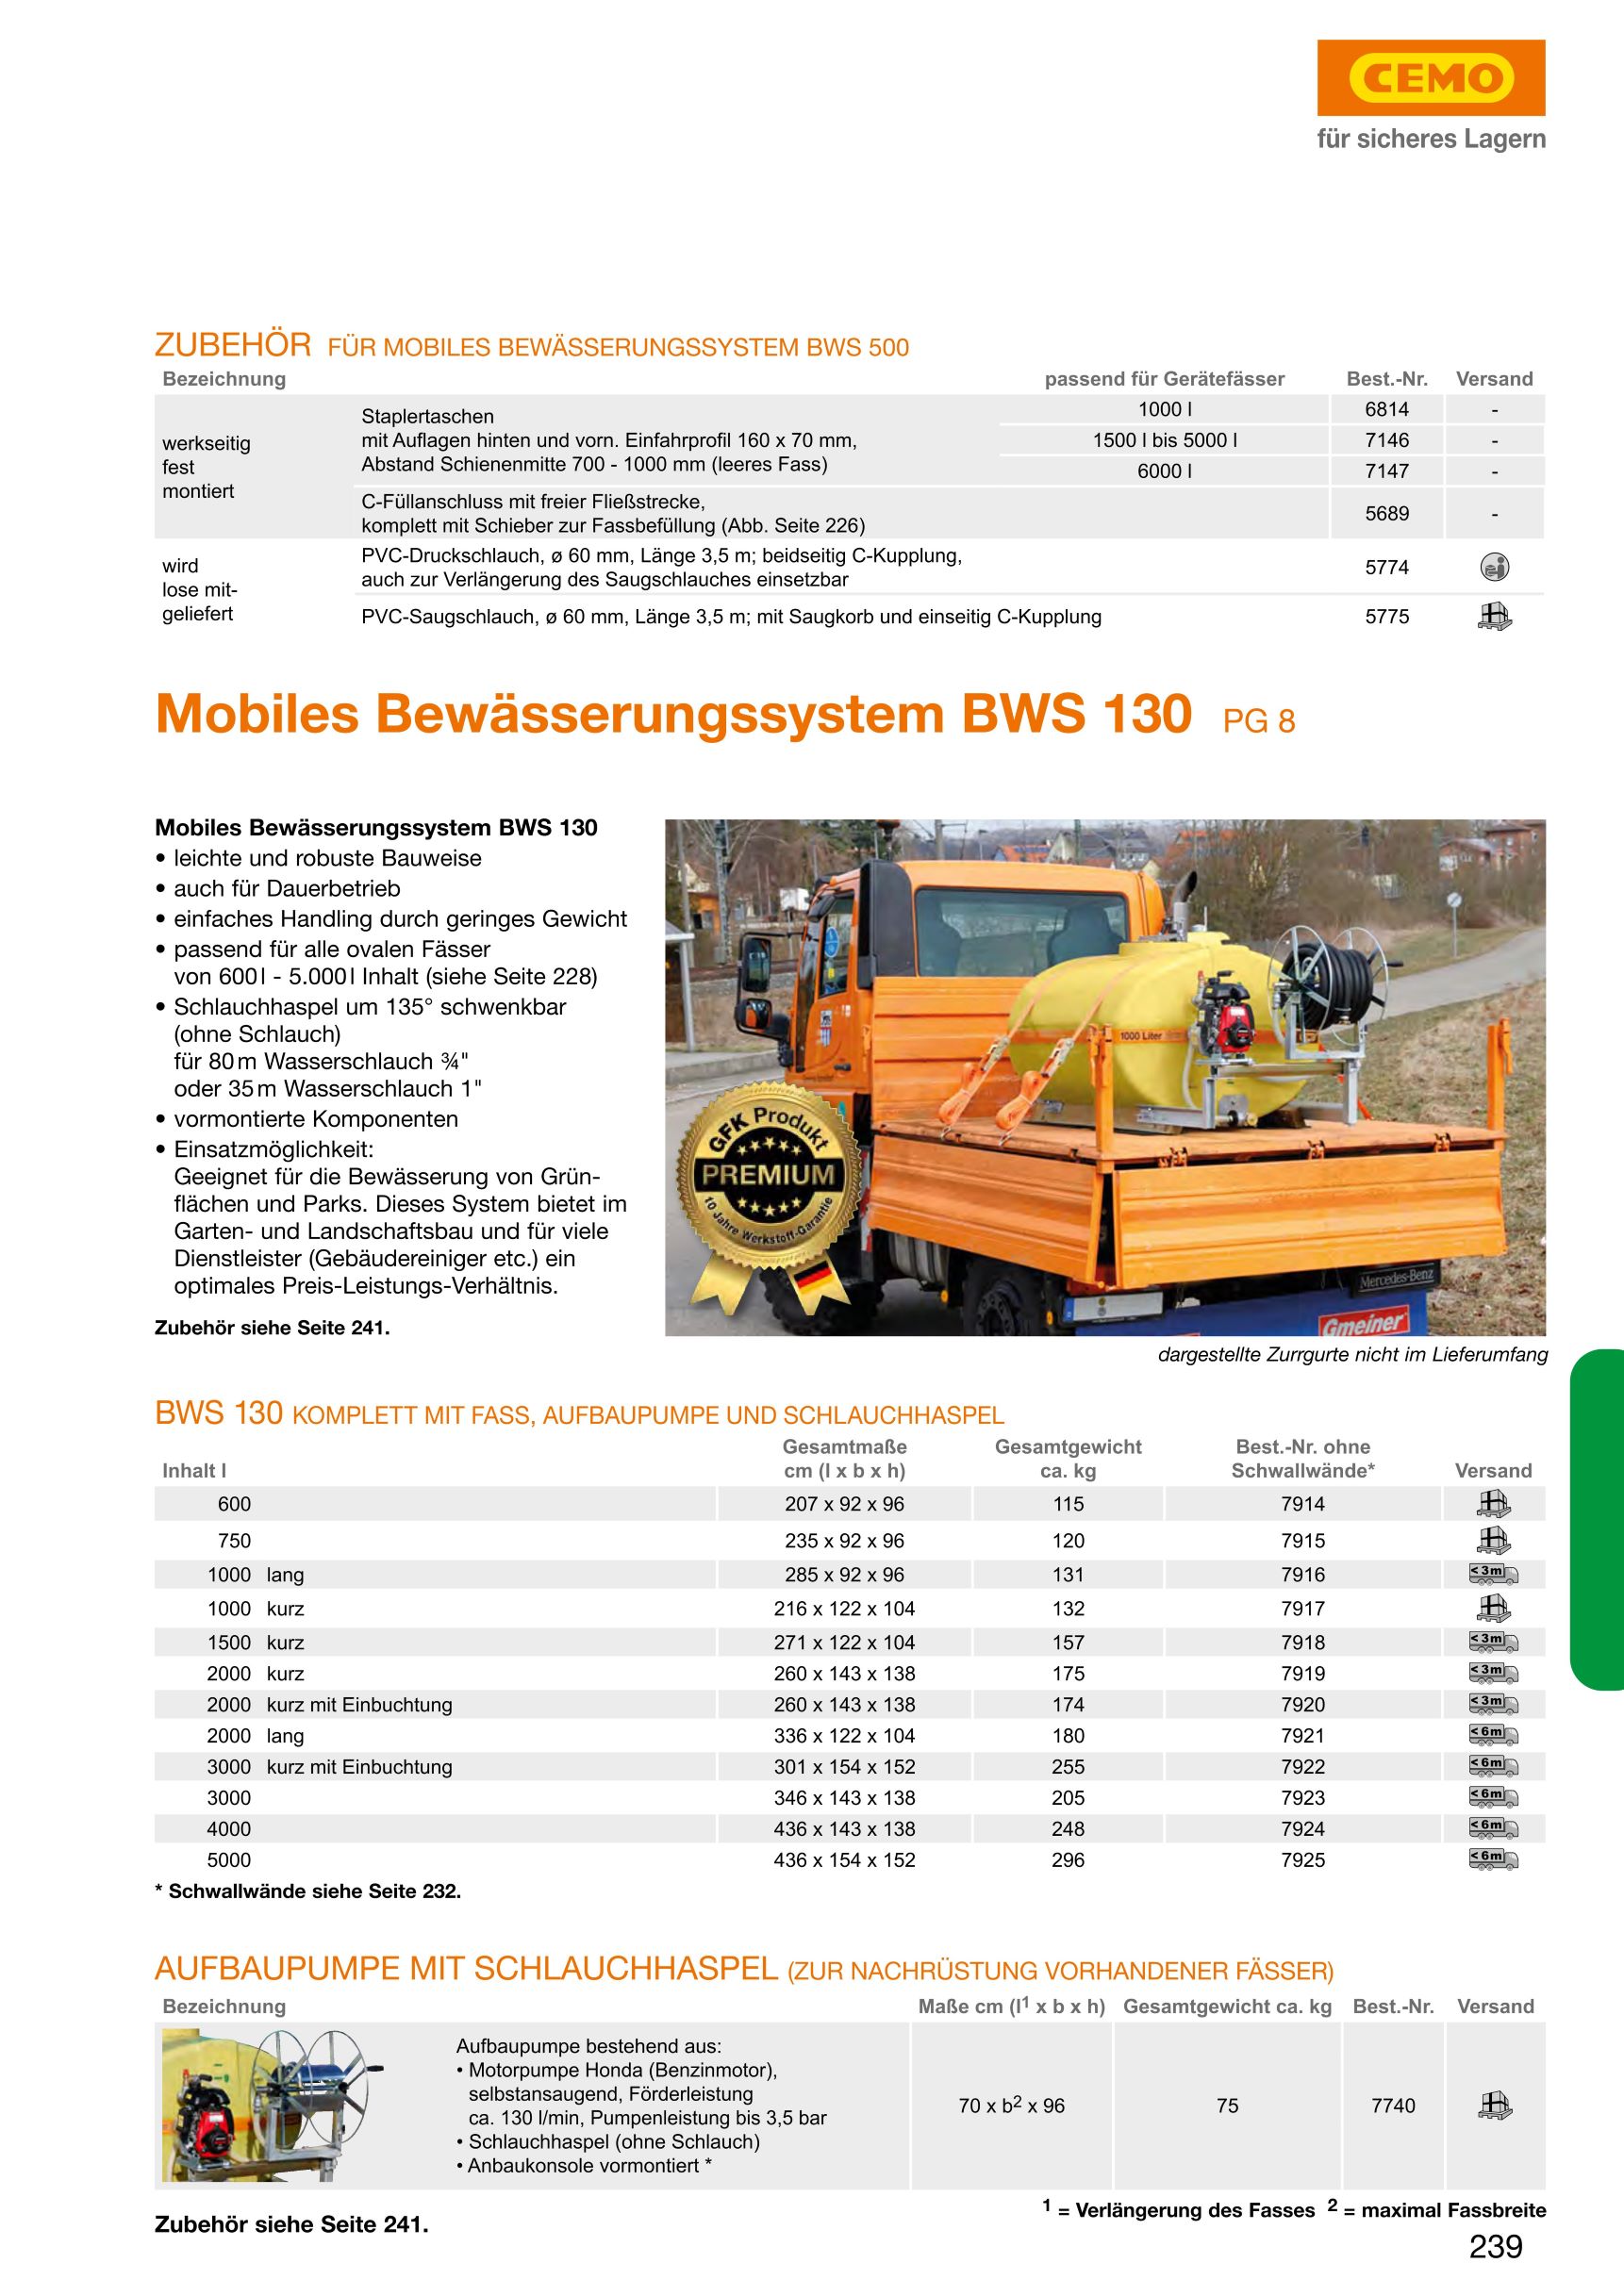 CEMO Mobiles Bewässerungssystem BWS 130, 2000 l kurz, Motorpumpe - 7919